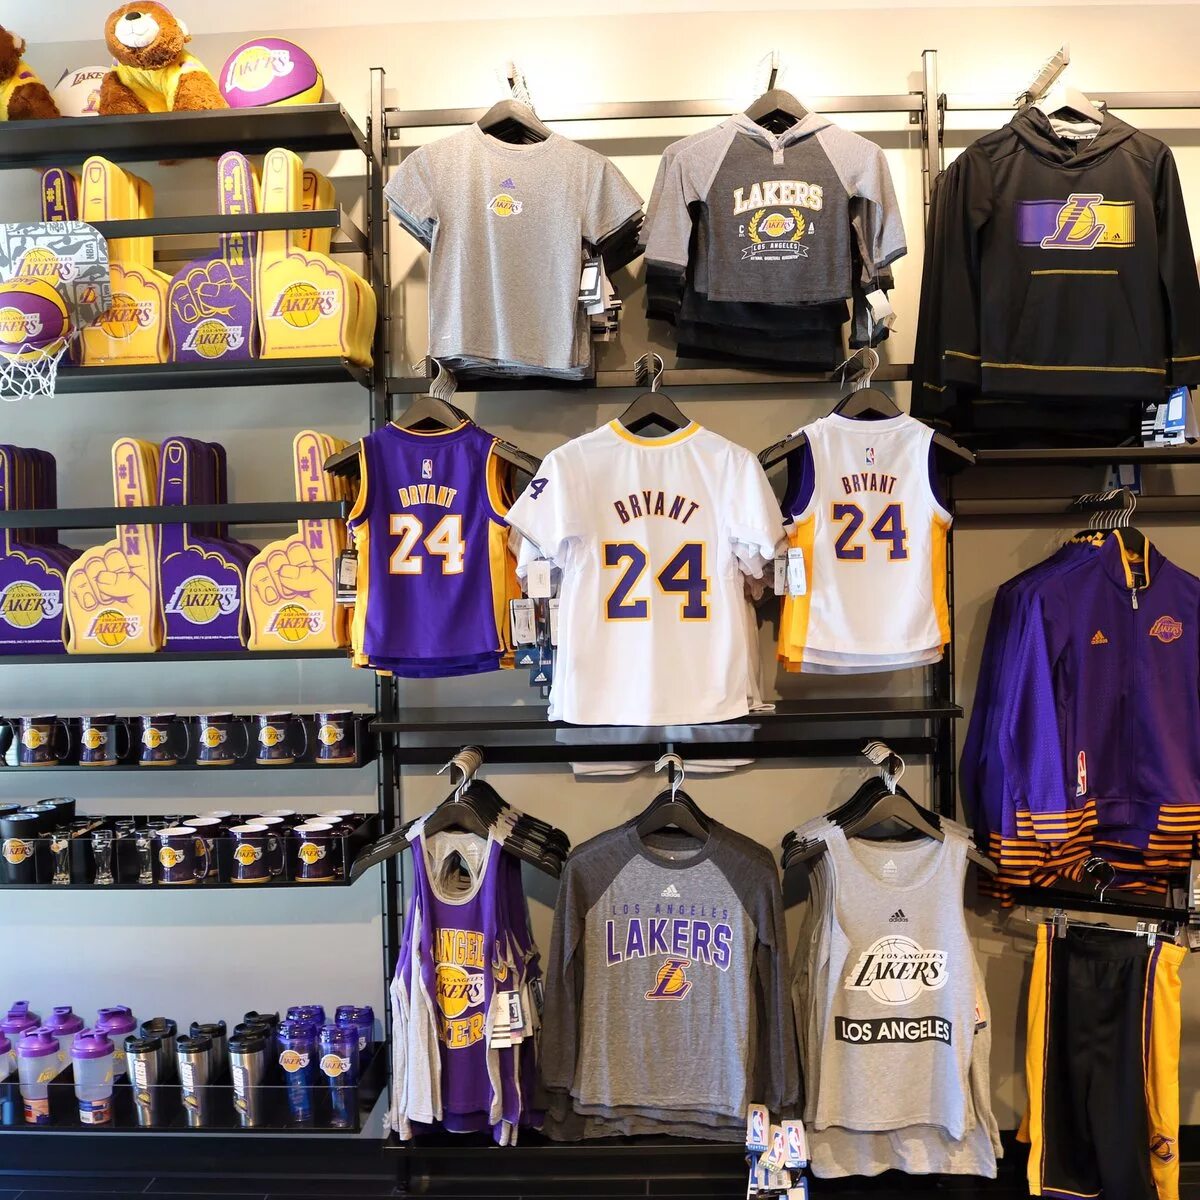 X shop магазин. Los Angeles Lakers мерч. Лос Анджелес Лейкерс мерч. Магазин Lakers в los Angeles. Лос-Анджелес Лейкерс магазины.